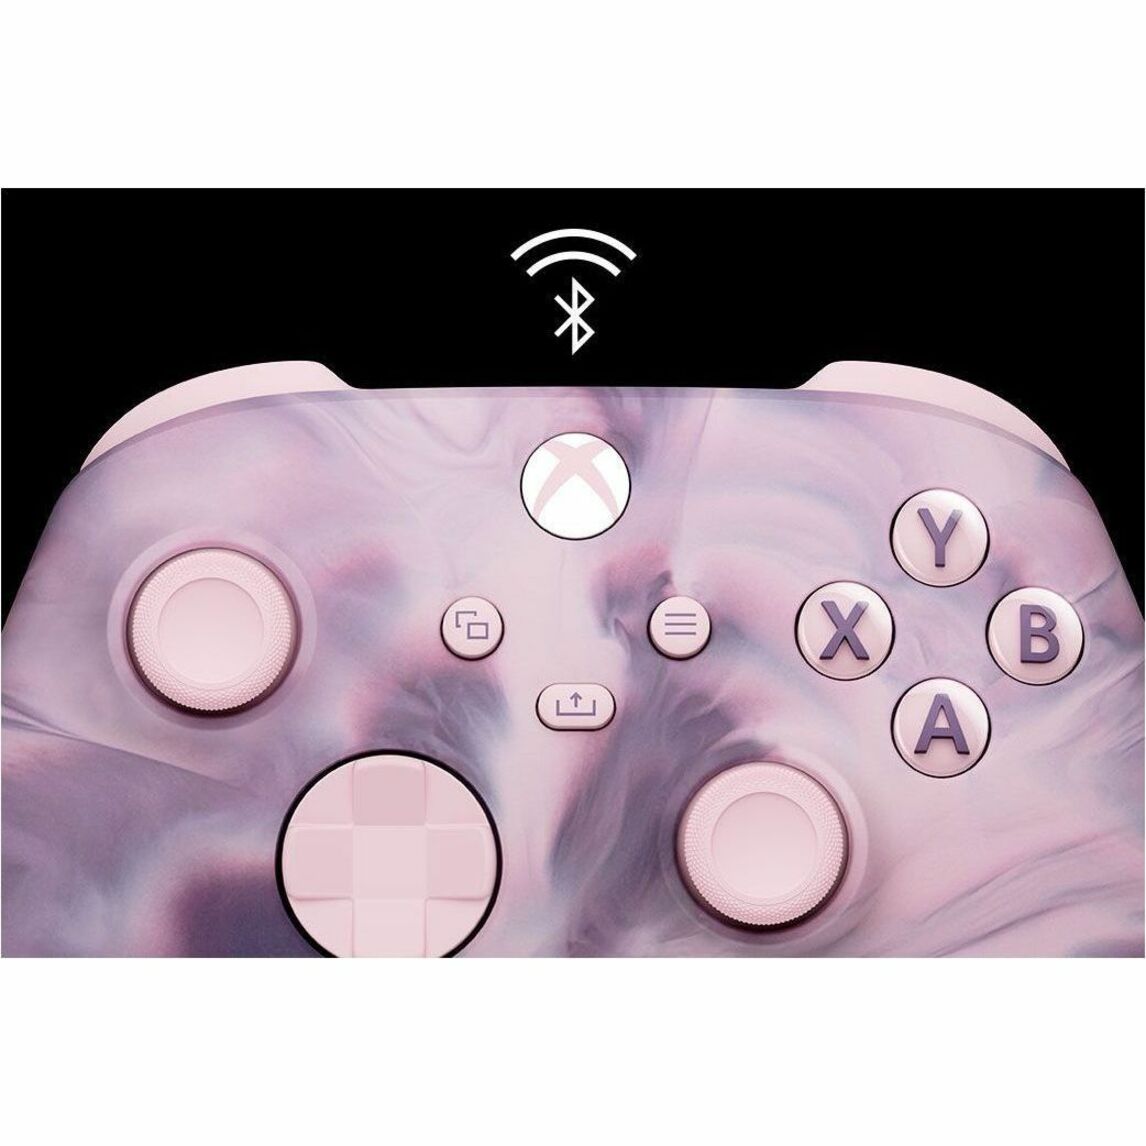 Microsoft QAU-00125 Xbox Wireless Controller - Dream Vapor Special Edition, Gaming Pad